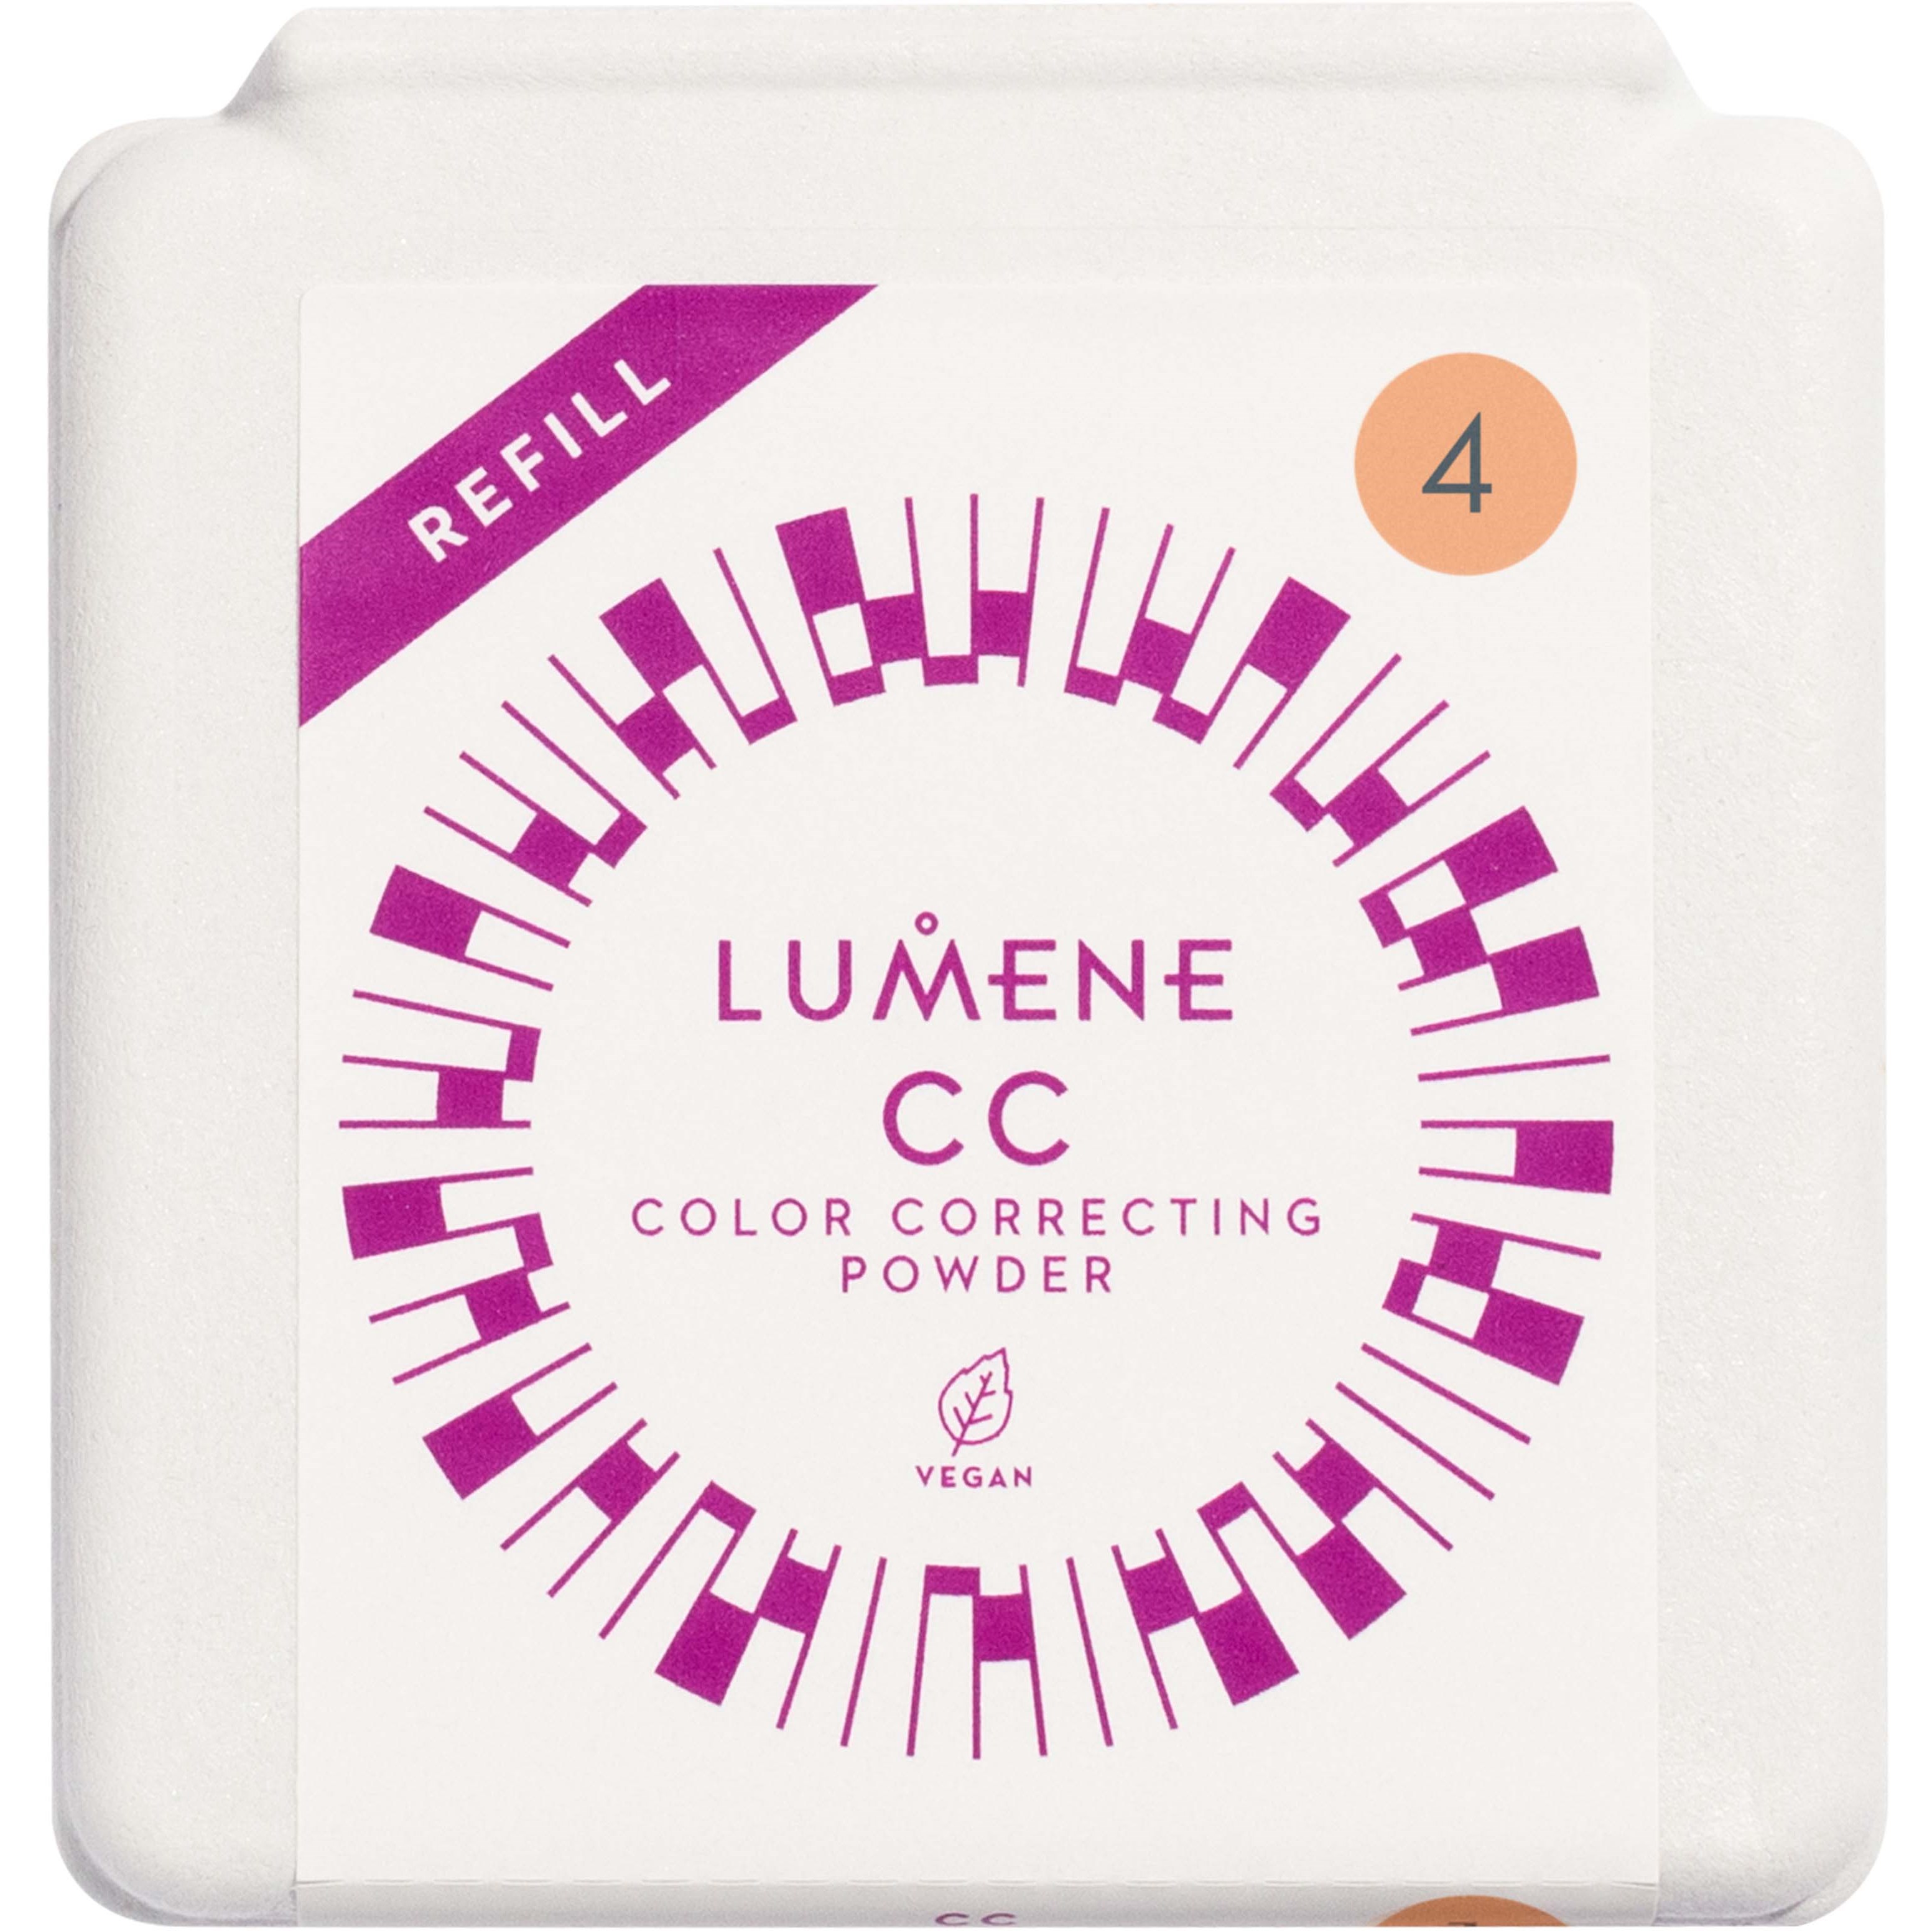 Lumene CC Color Correcting Powder Refill 4